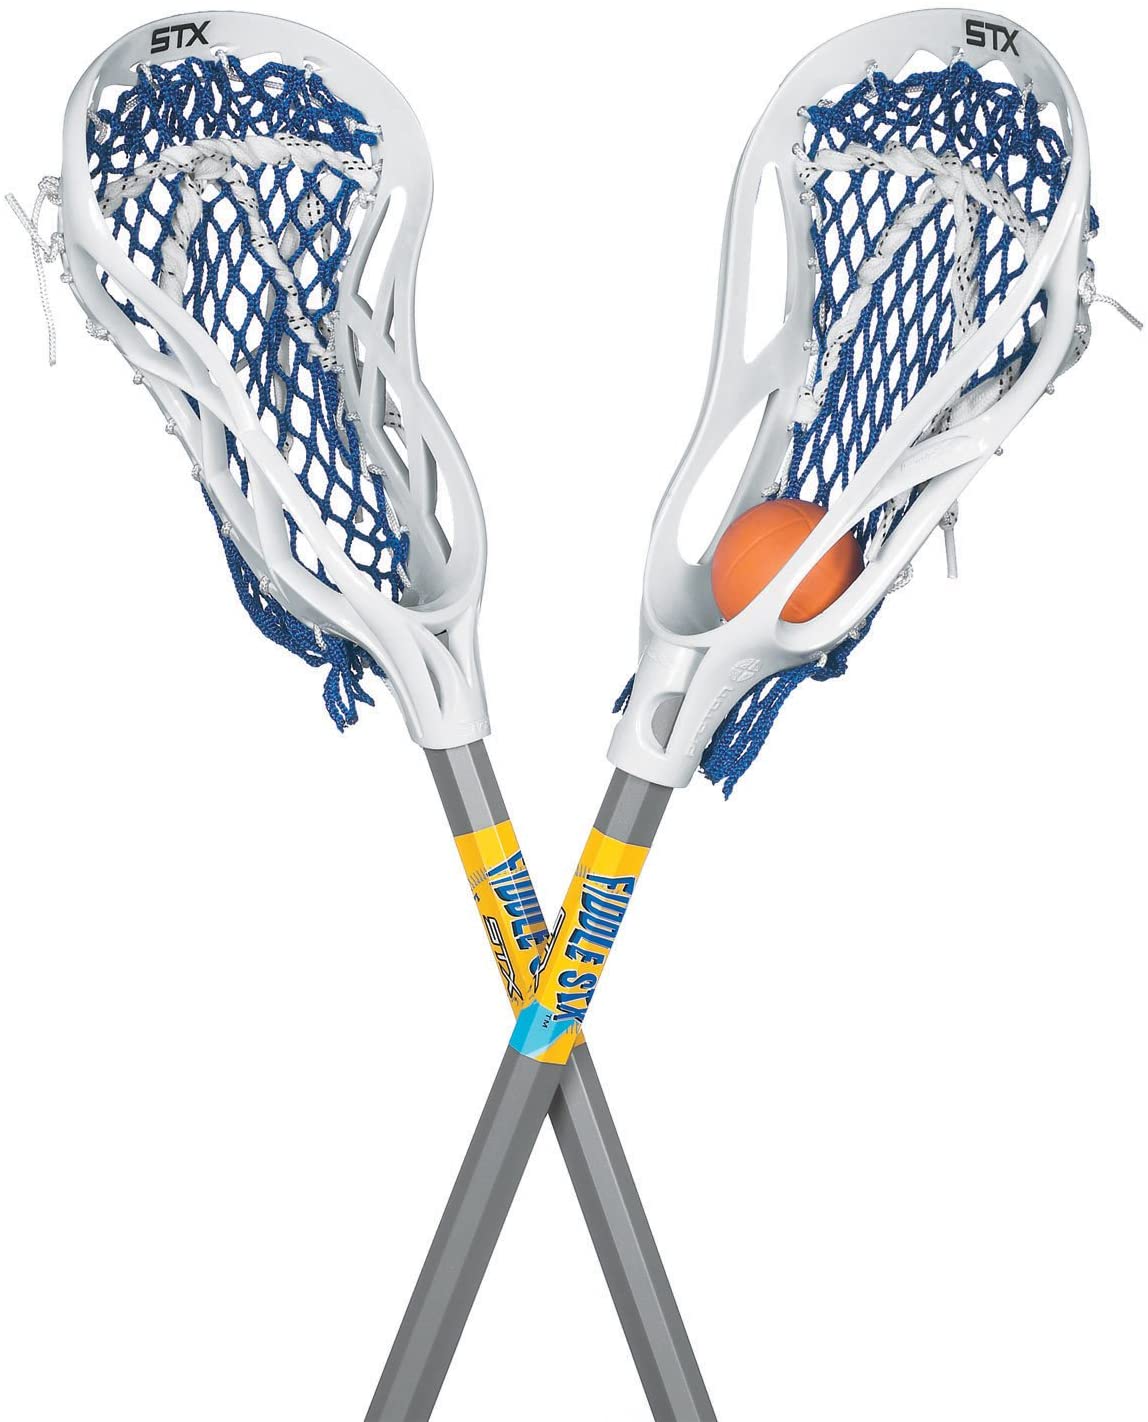 STX FiddleSTX Mini Lacrosse Sticks With Ball, 2-Pack